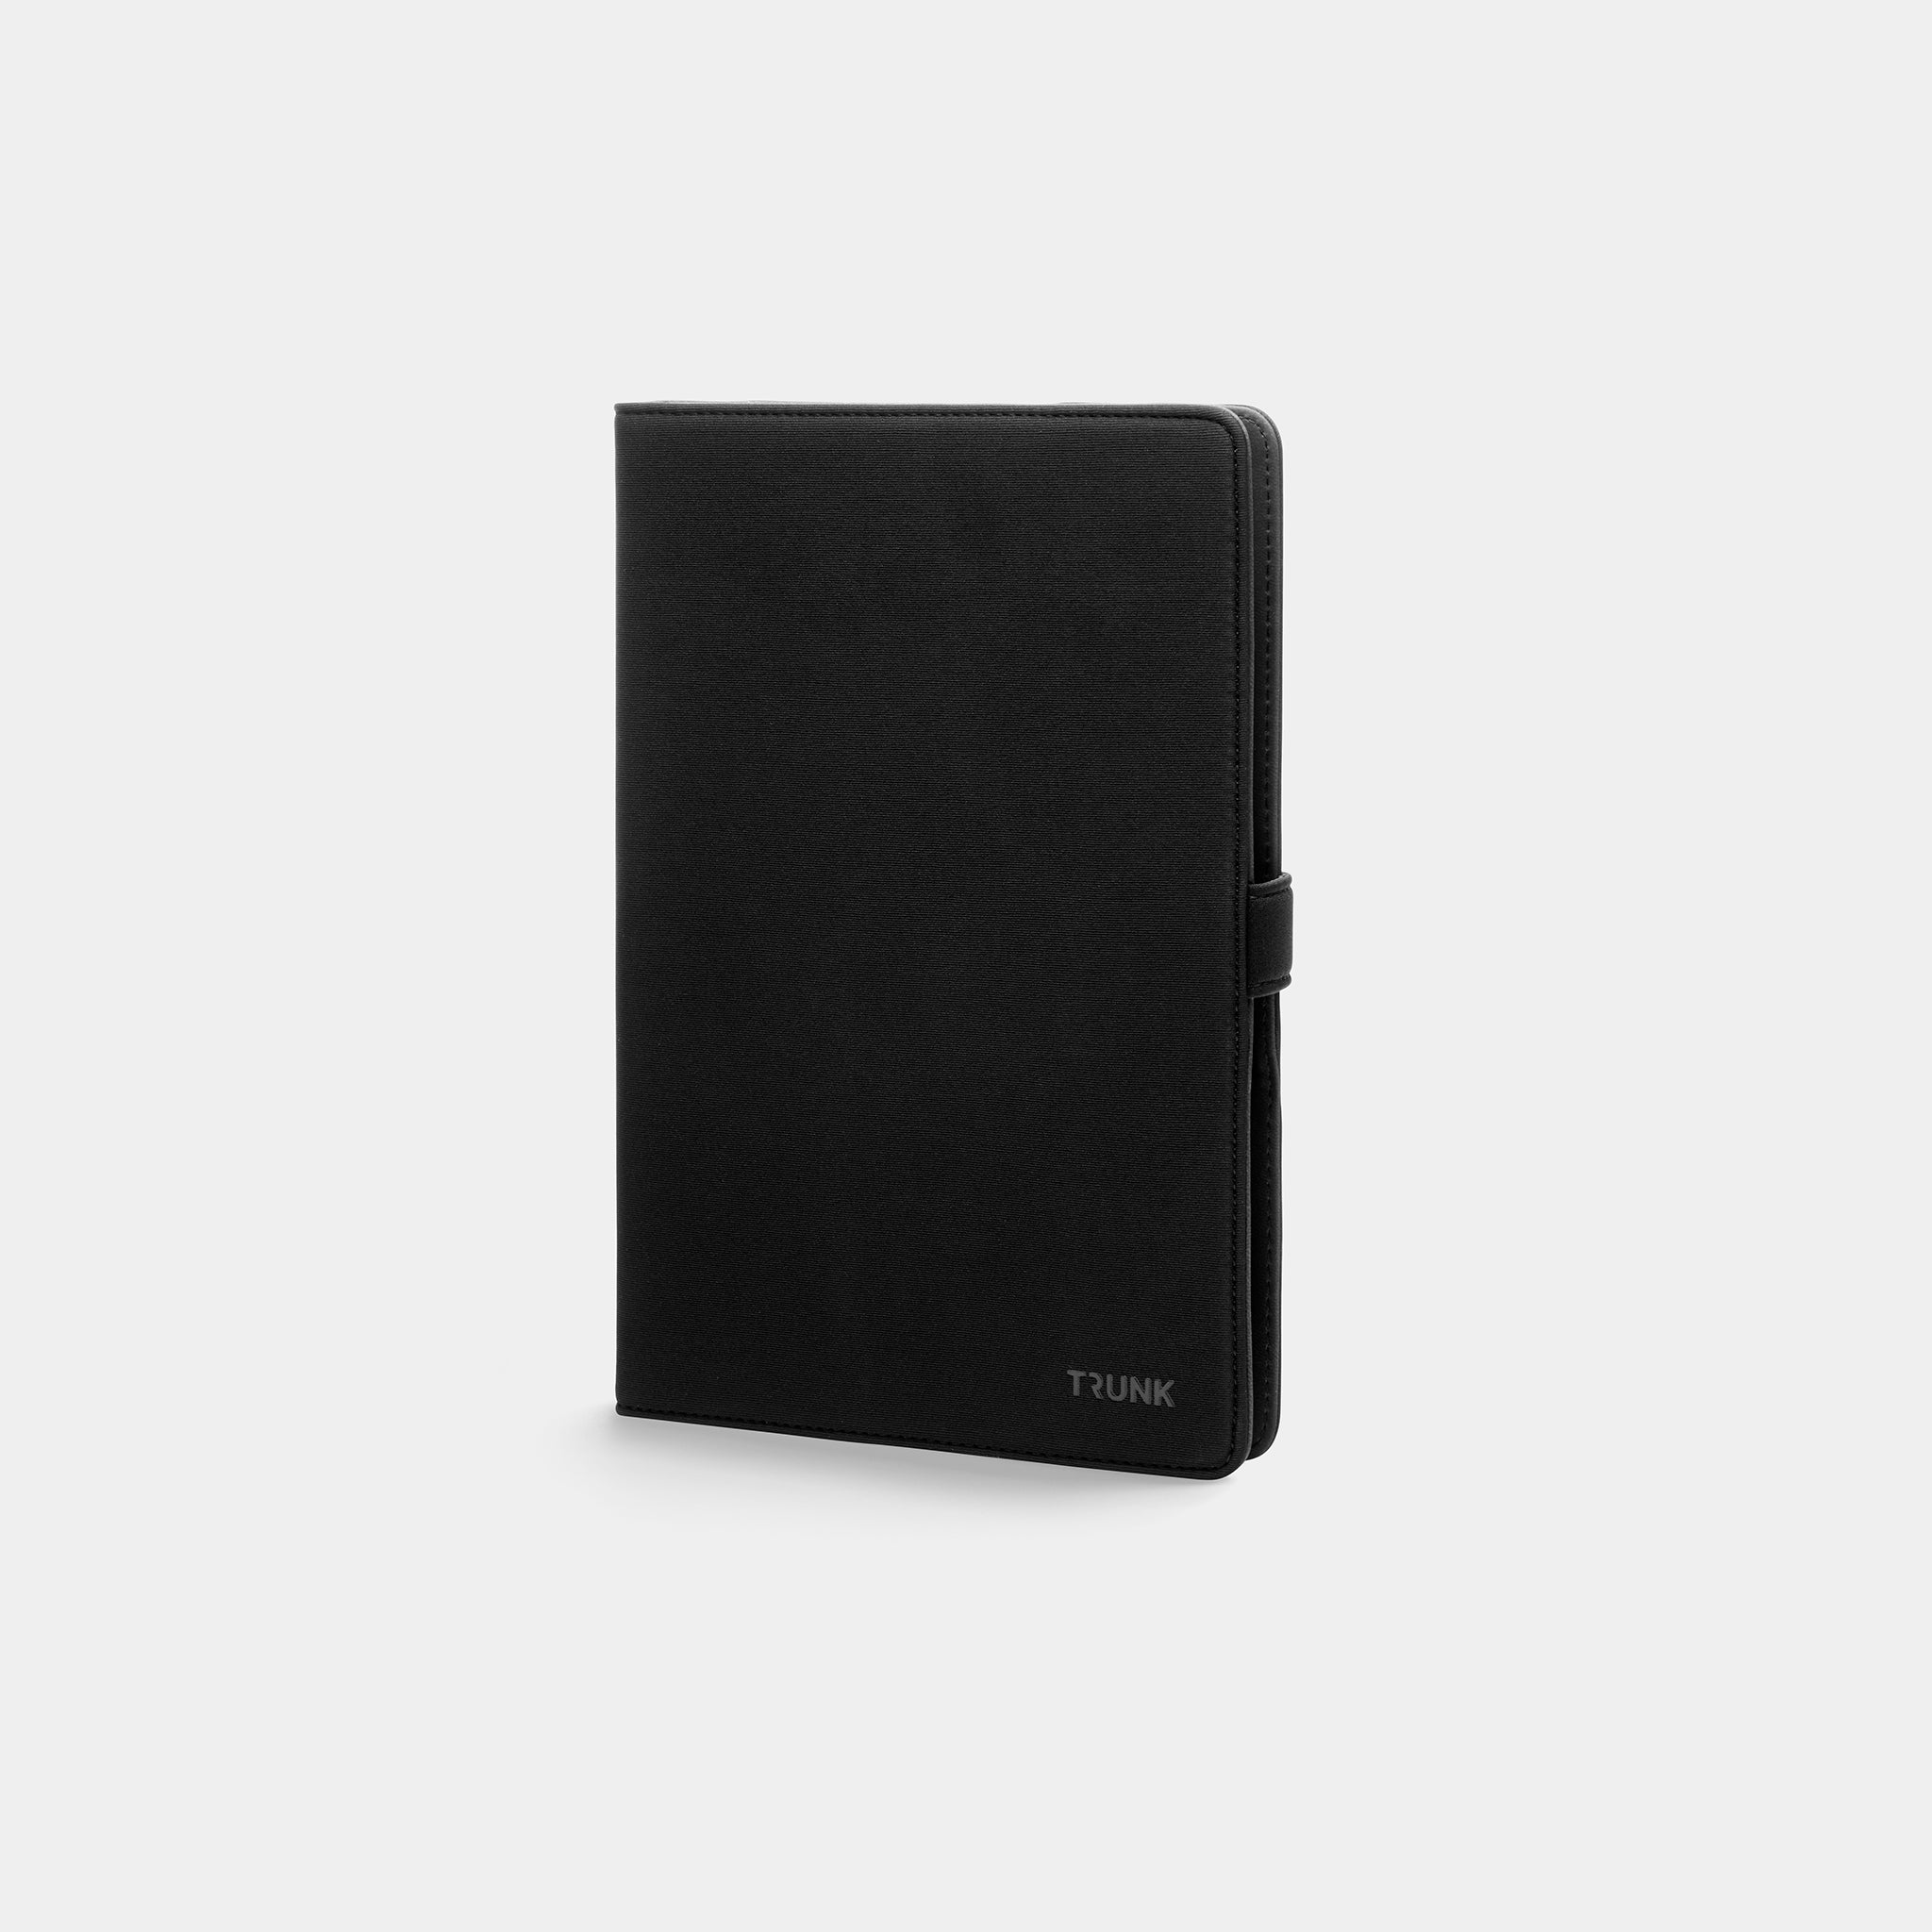 Black Universal Tablet - One size - Neoprene Sleeve